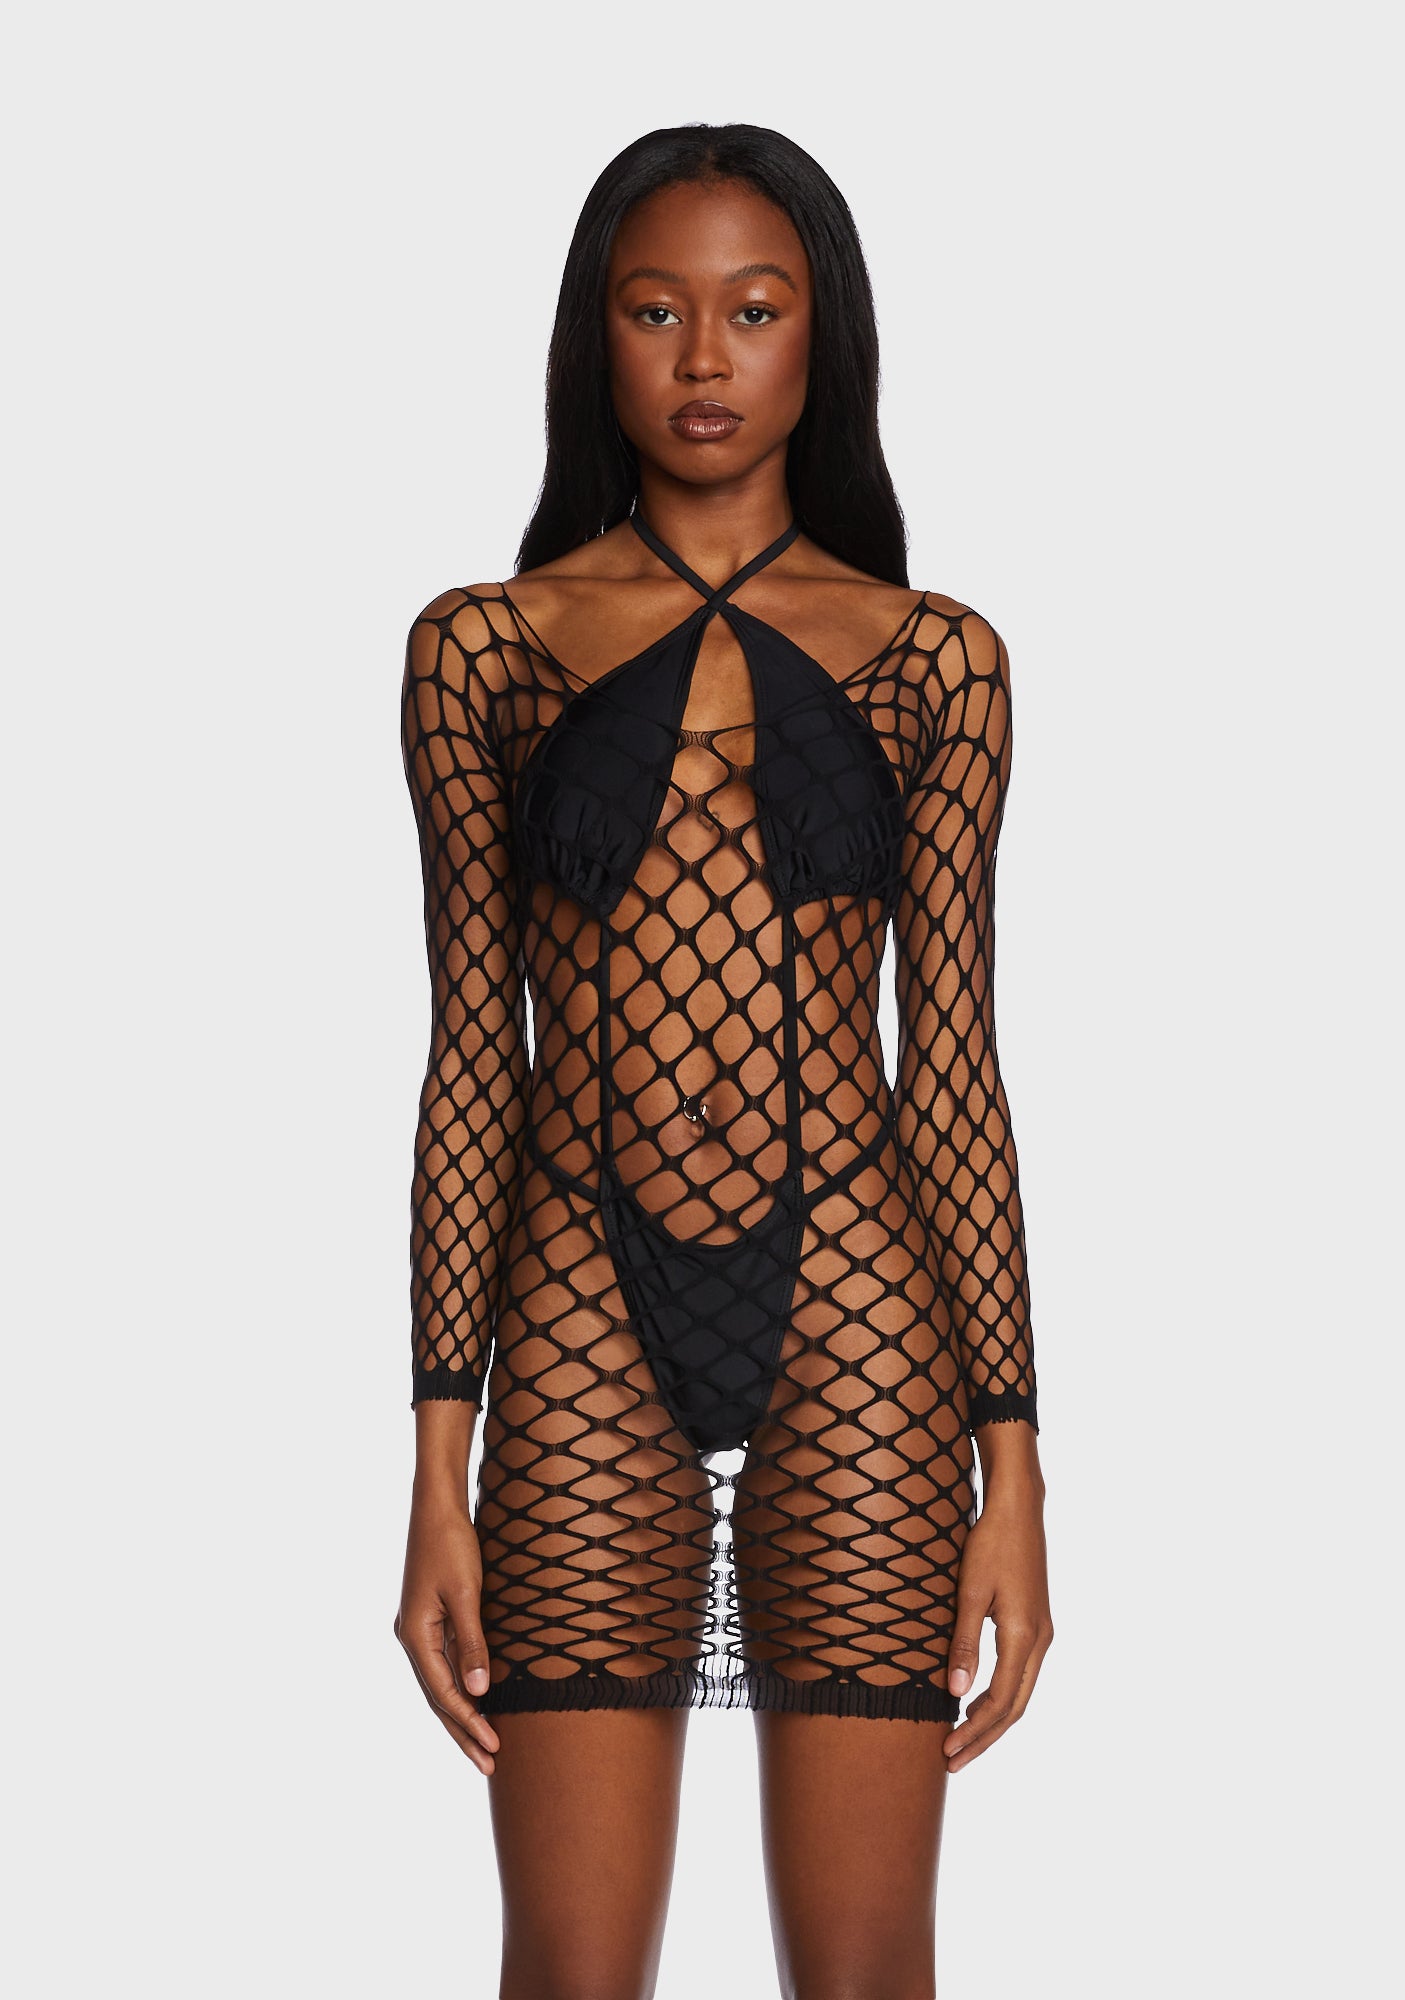 Black Rhinestone Fishnet Body Sexy Black Dress Perfect For